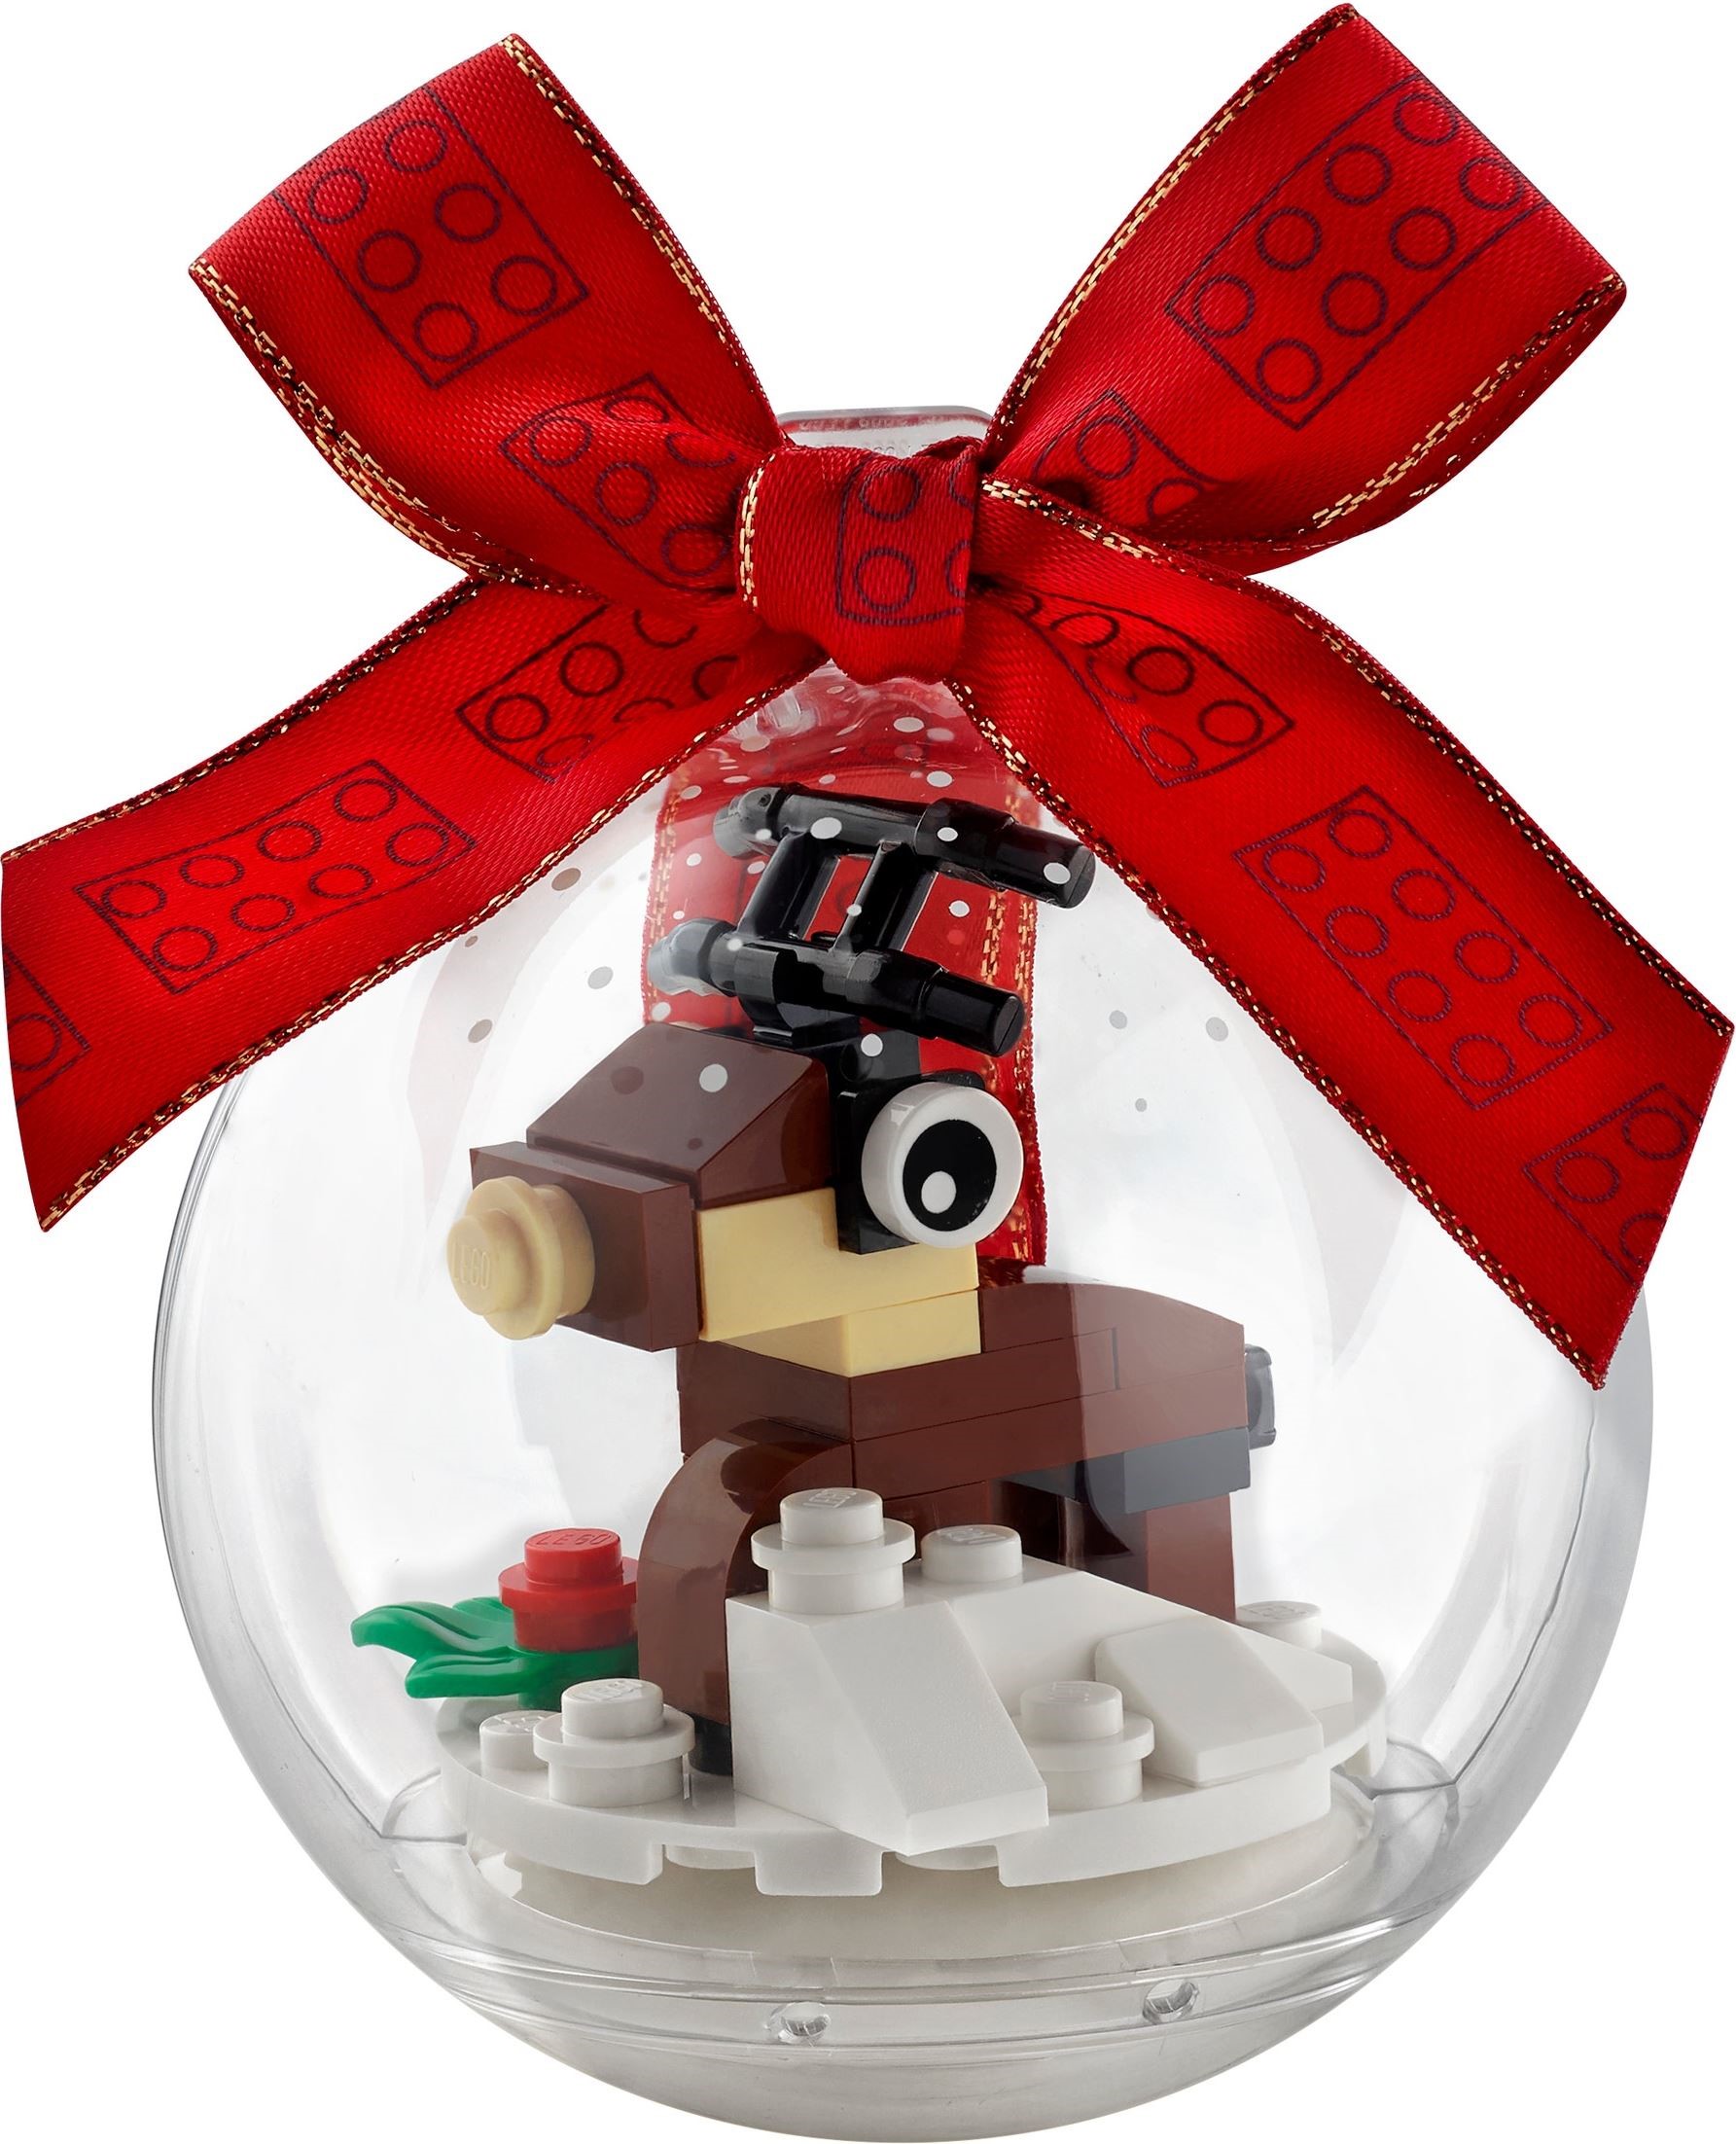 1x Snowman & 1x Christmas Pudding Bauble Decorations Lego Baubles 